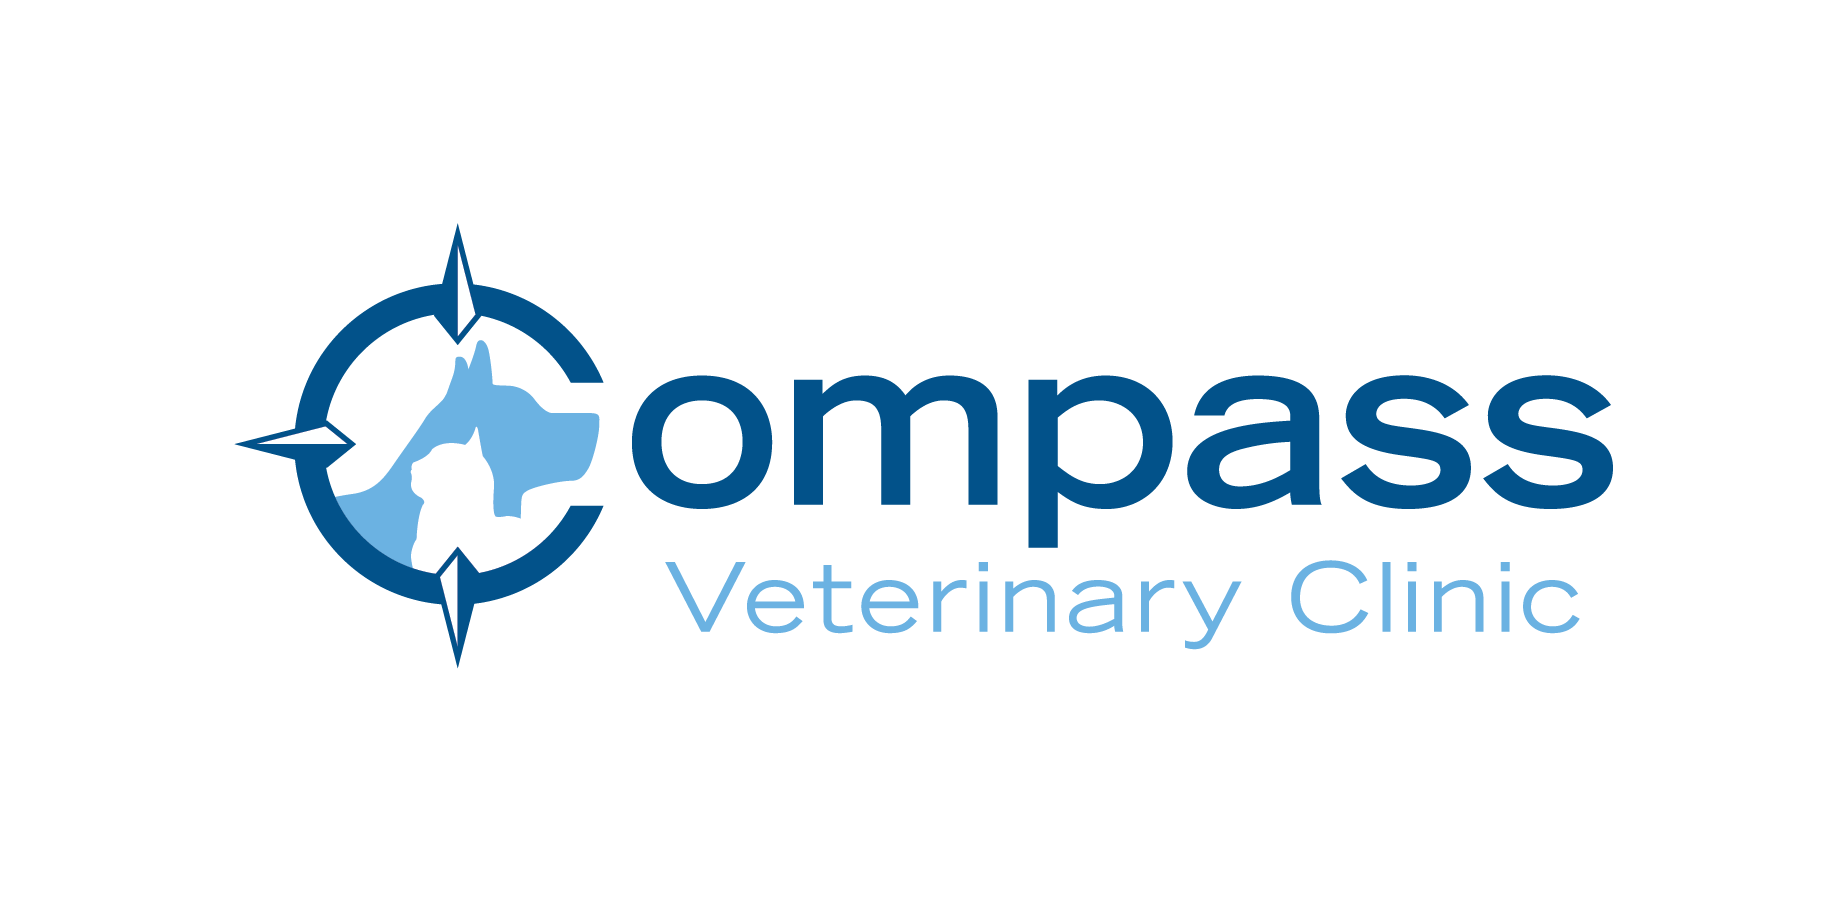 Compass Veterinary Clinic